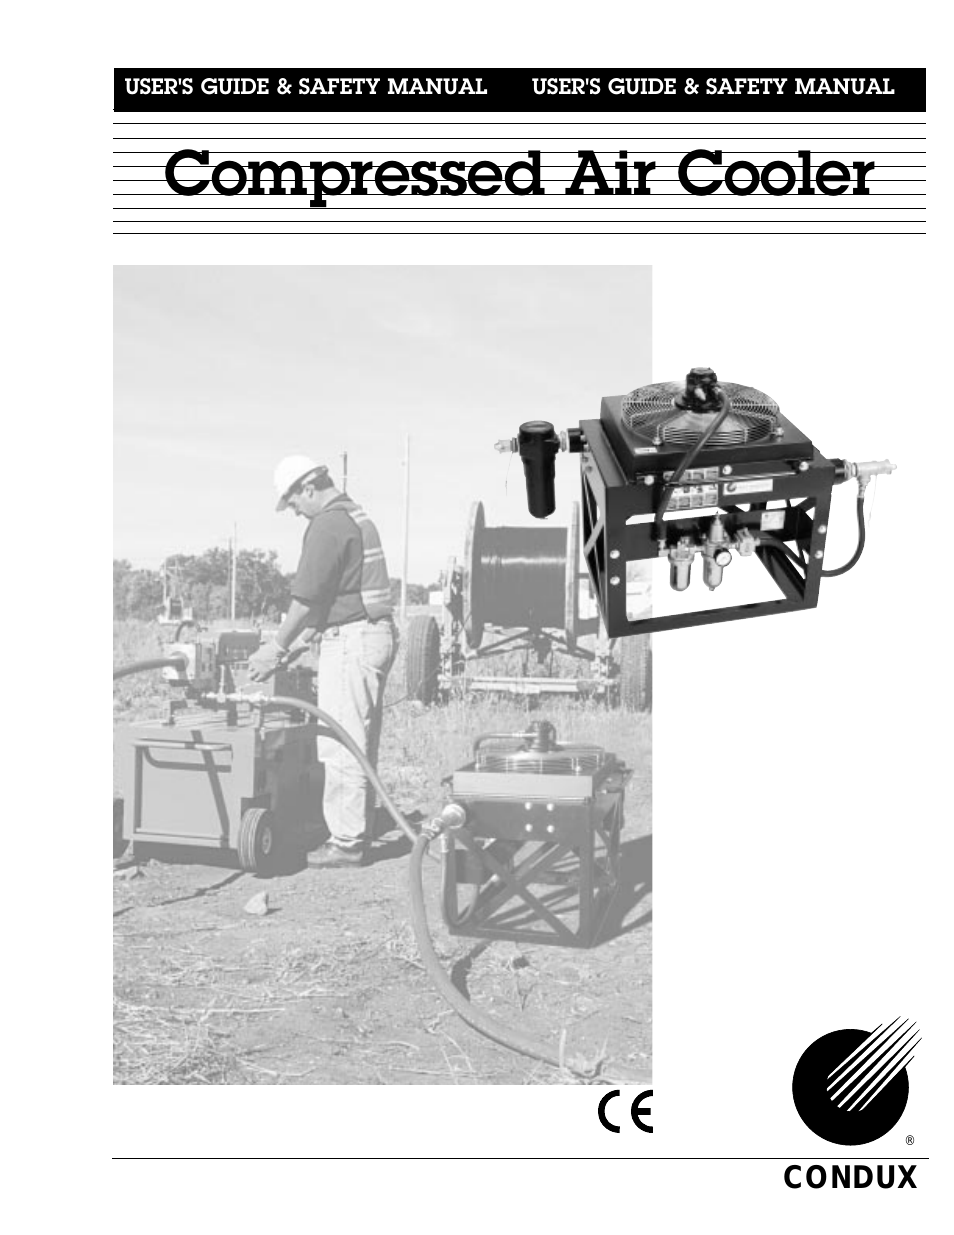 Compressed Air Cooler